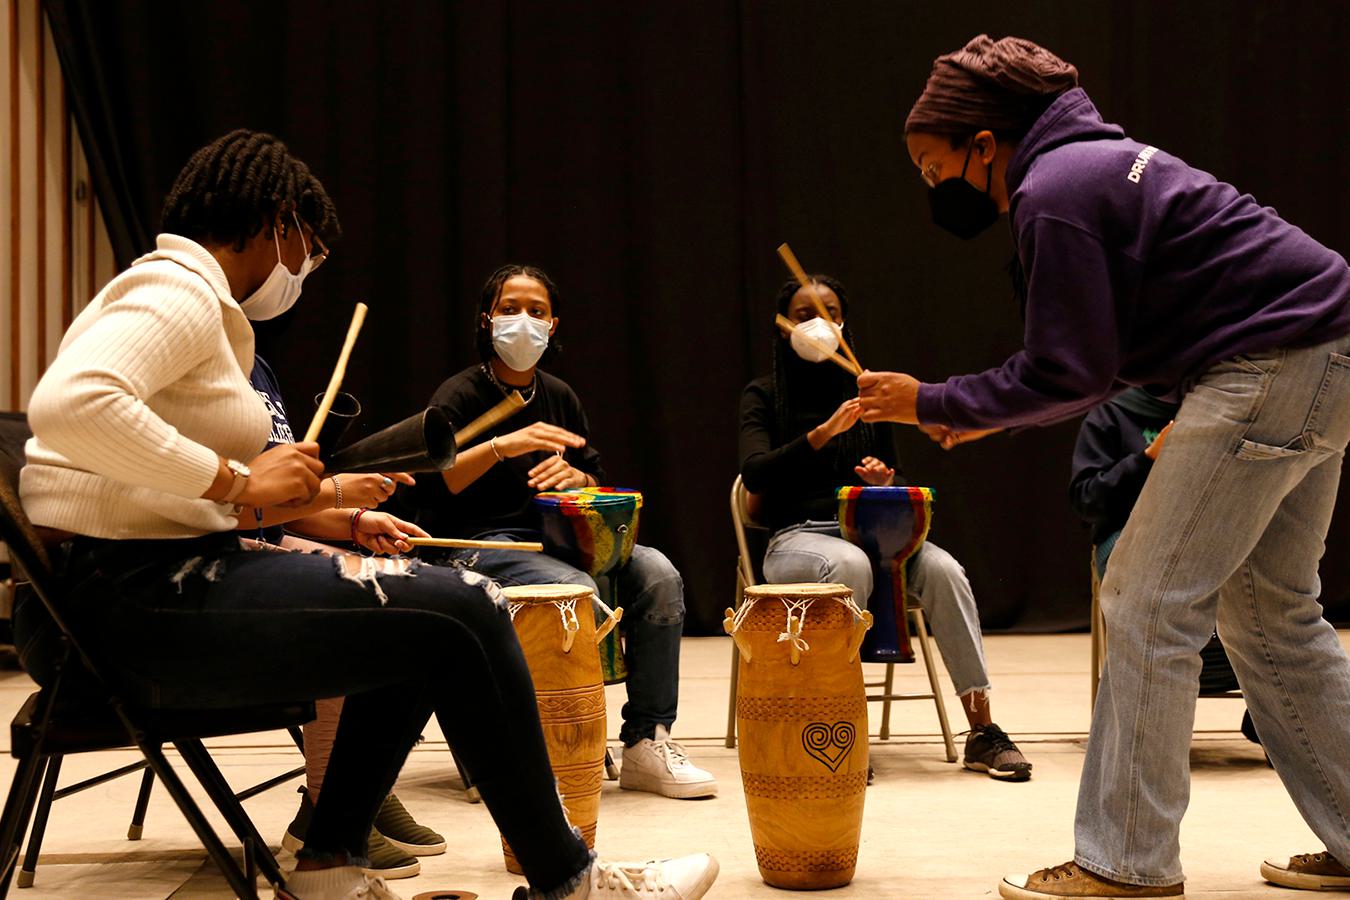 Kera Washington demonstrates drumming to students in Yanvalou.